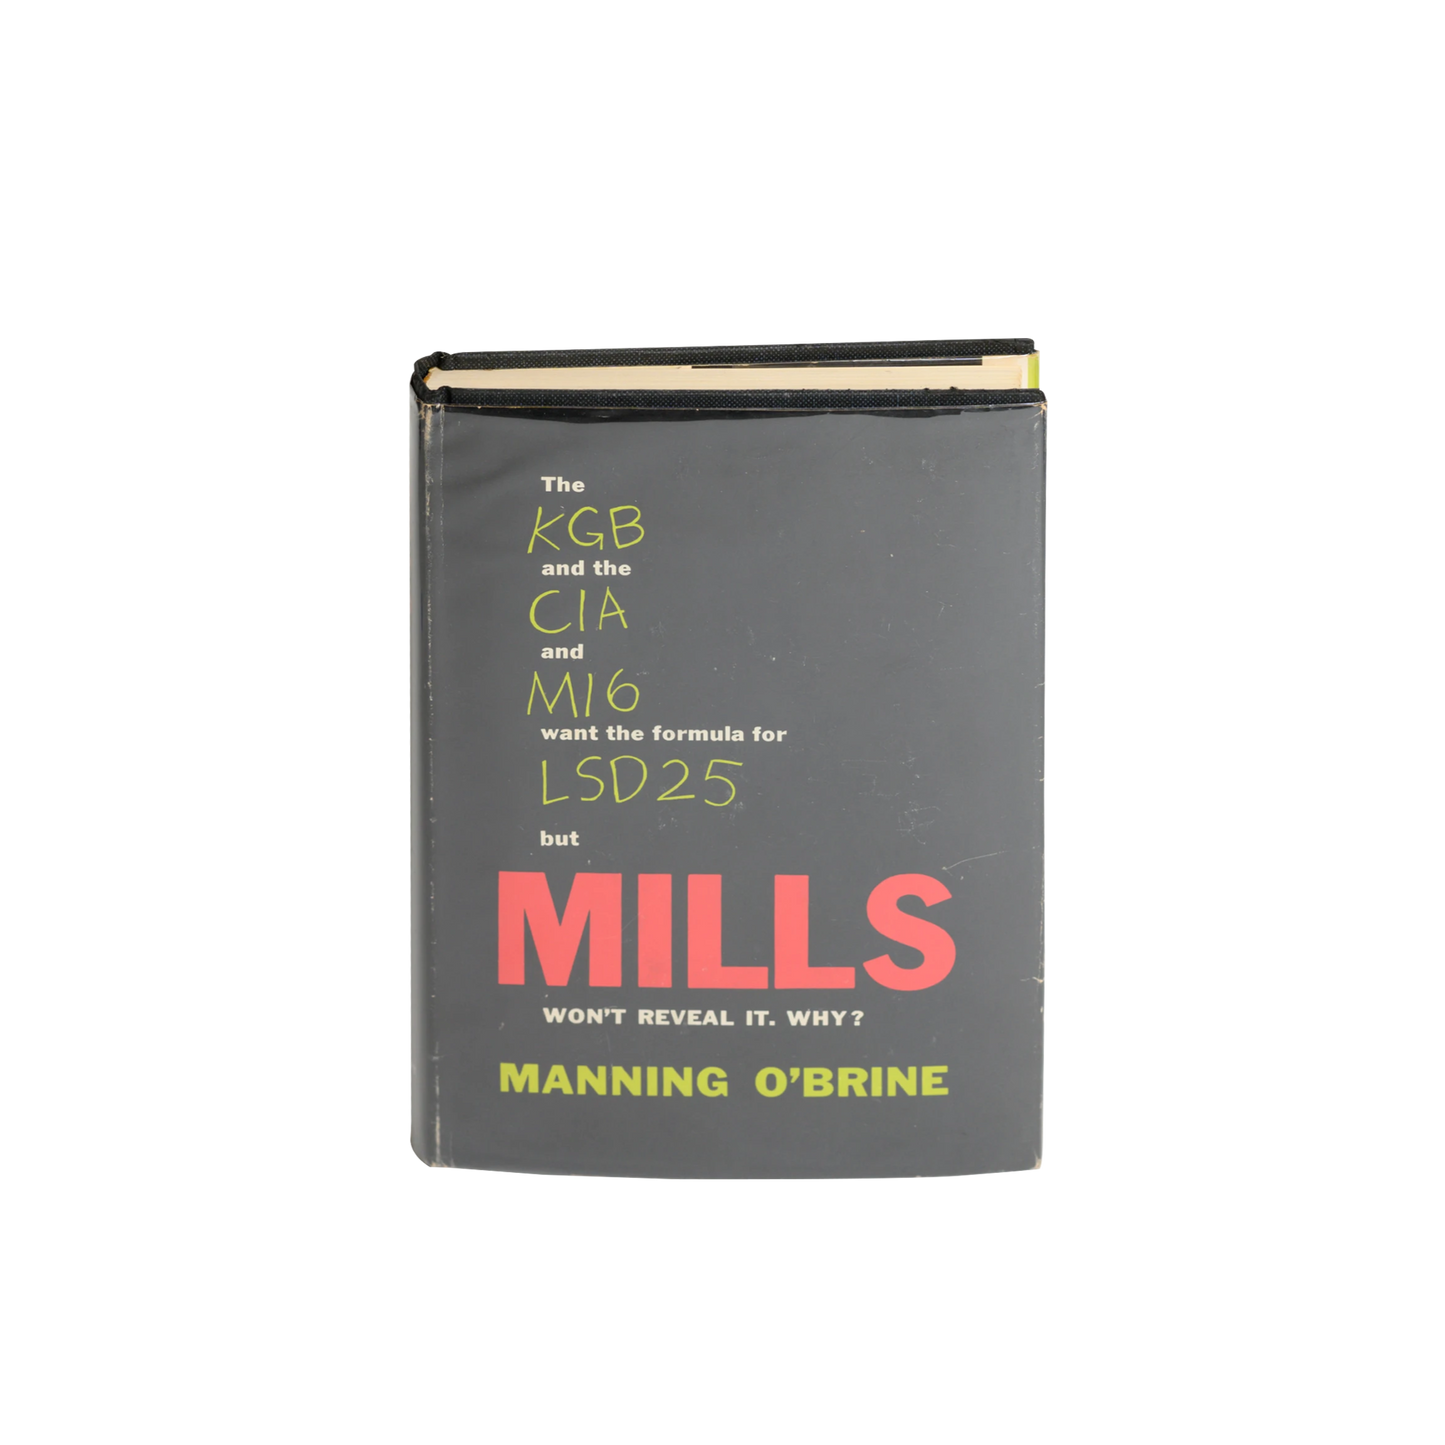 Mills - 